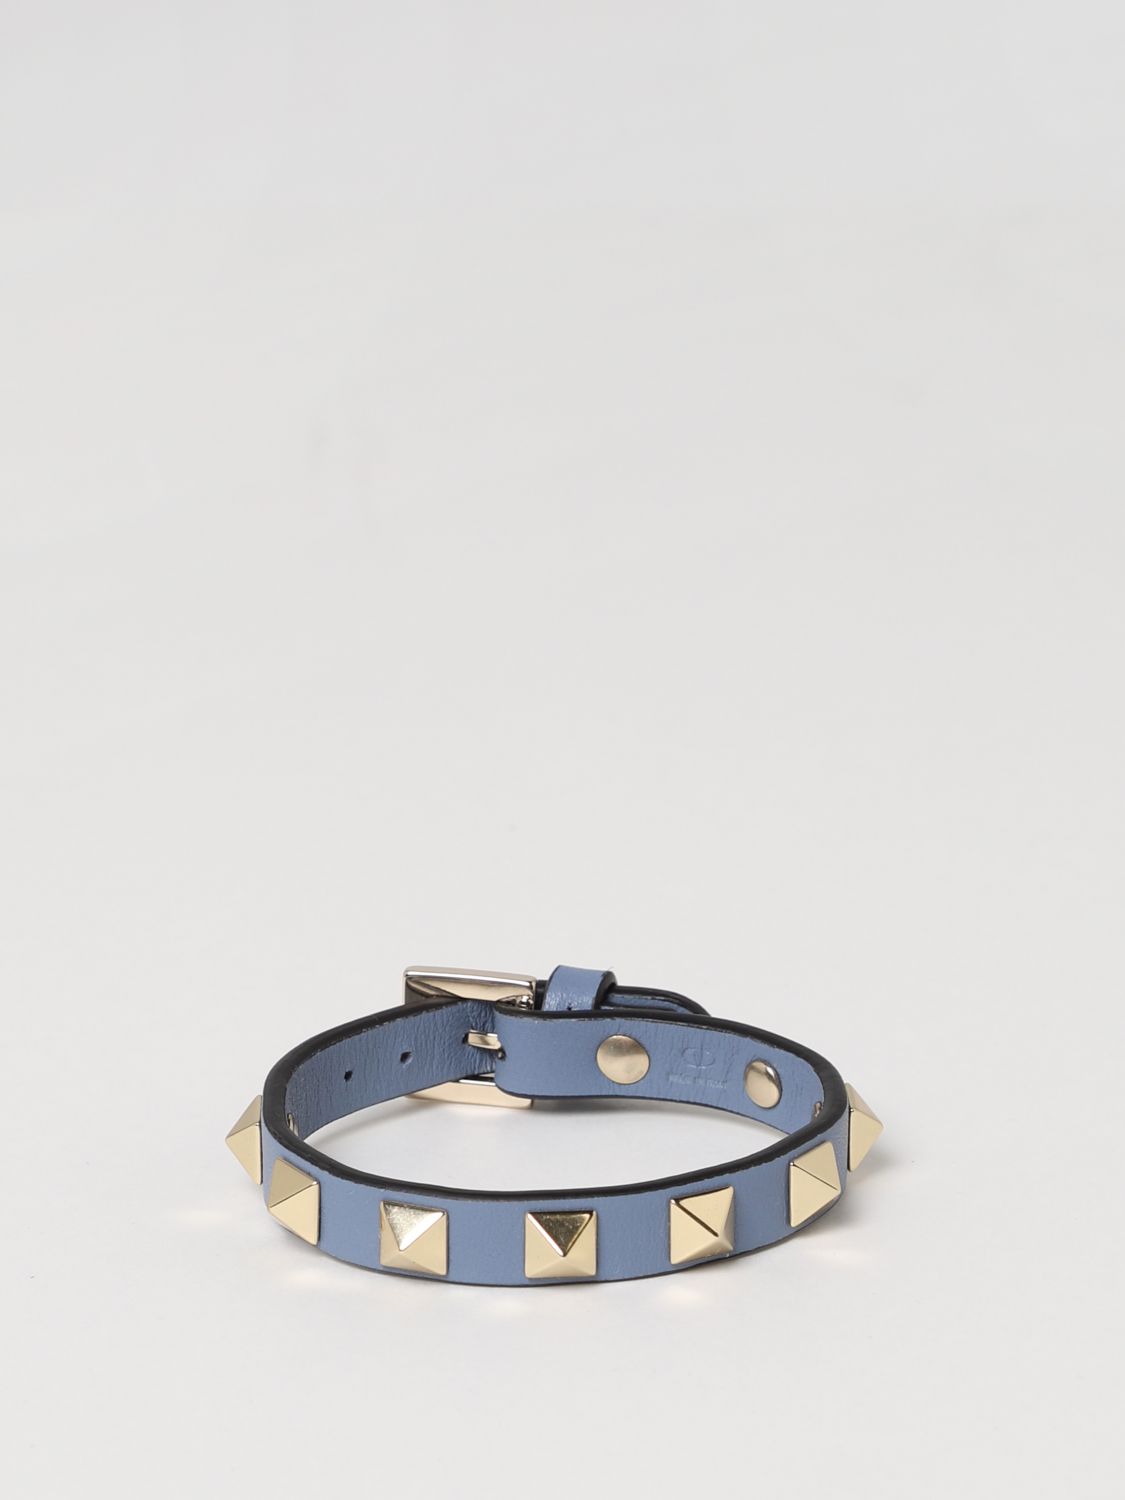 kampagne Fleksibel katastrofe VALENTINO GARAVANI: Rockstud leather bracelet - Blue | Valentino Garavani  jewel 1W2J0255VIT online at GIGLIO.COM